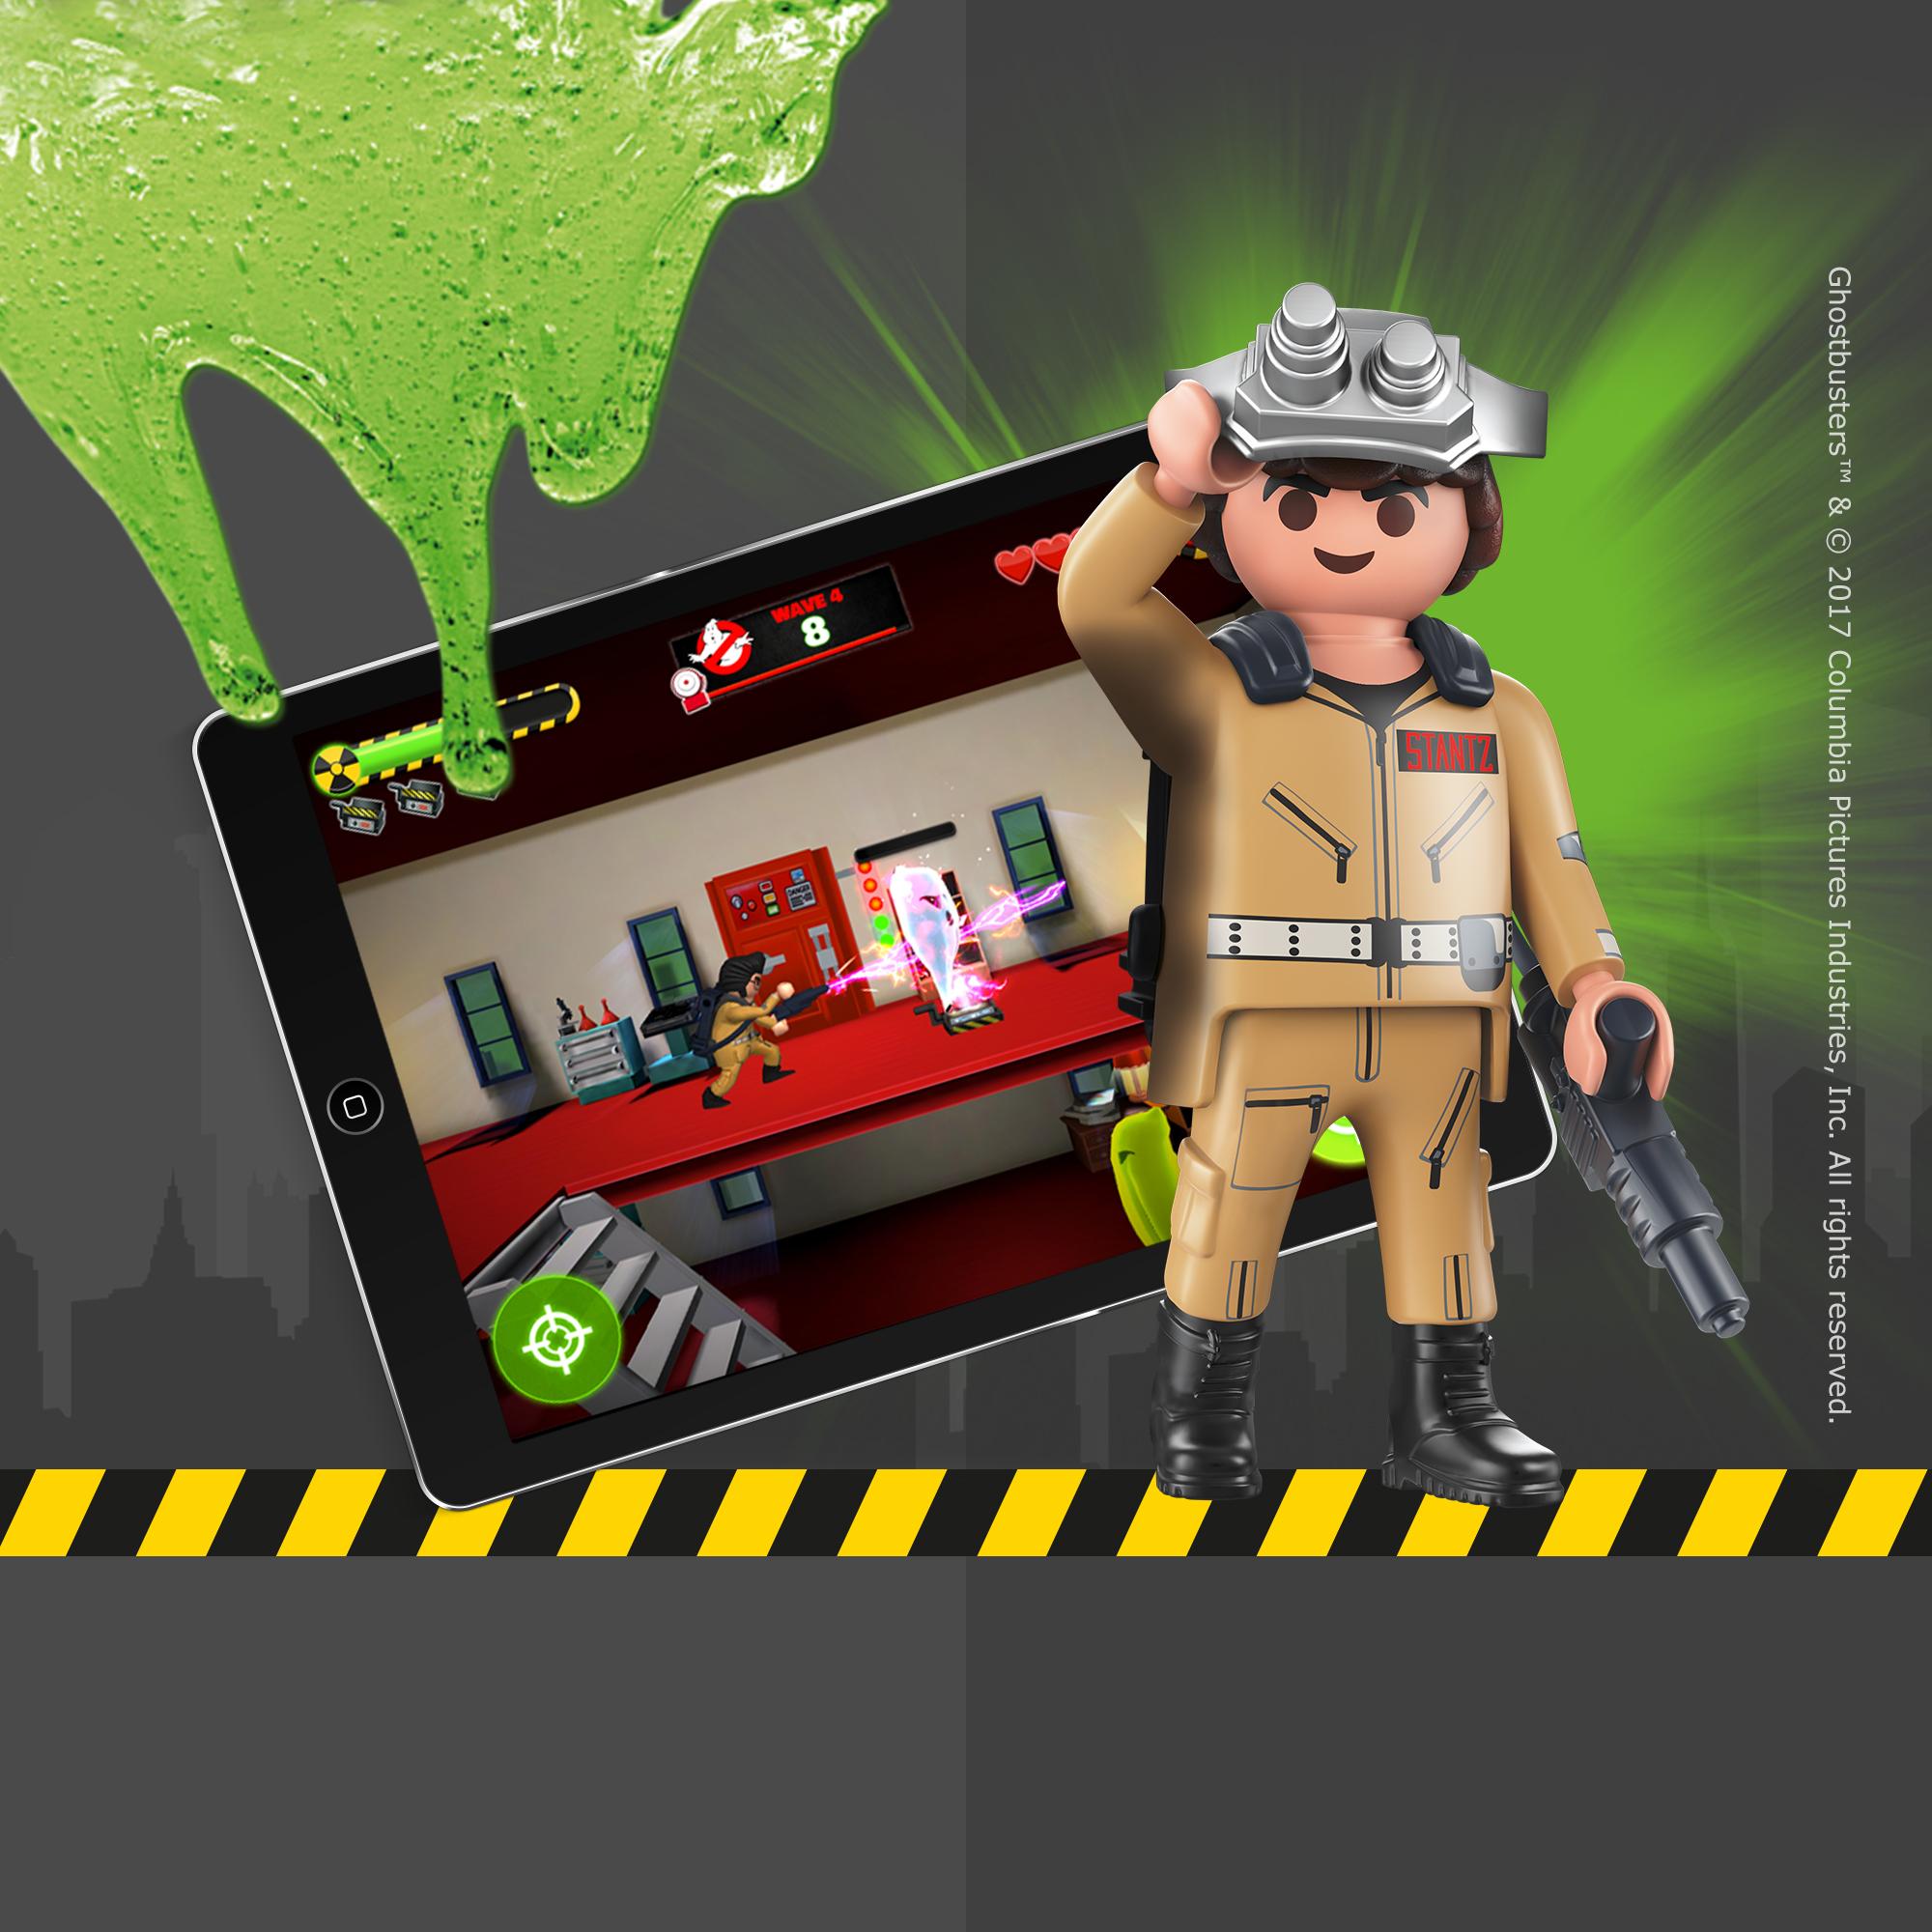 ghostbusters playmobil app